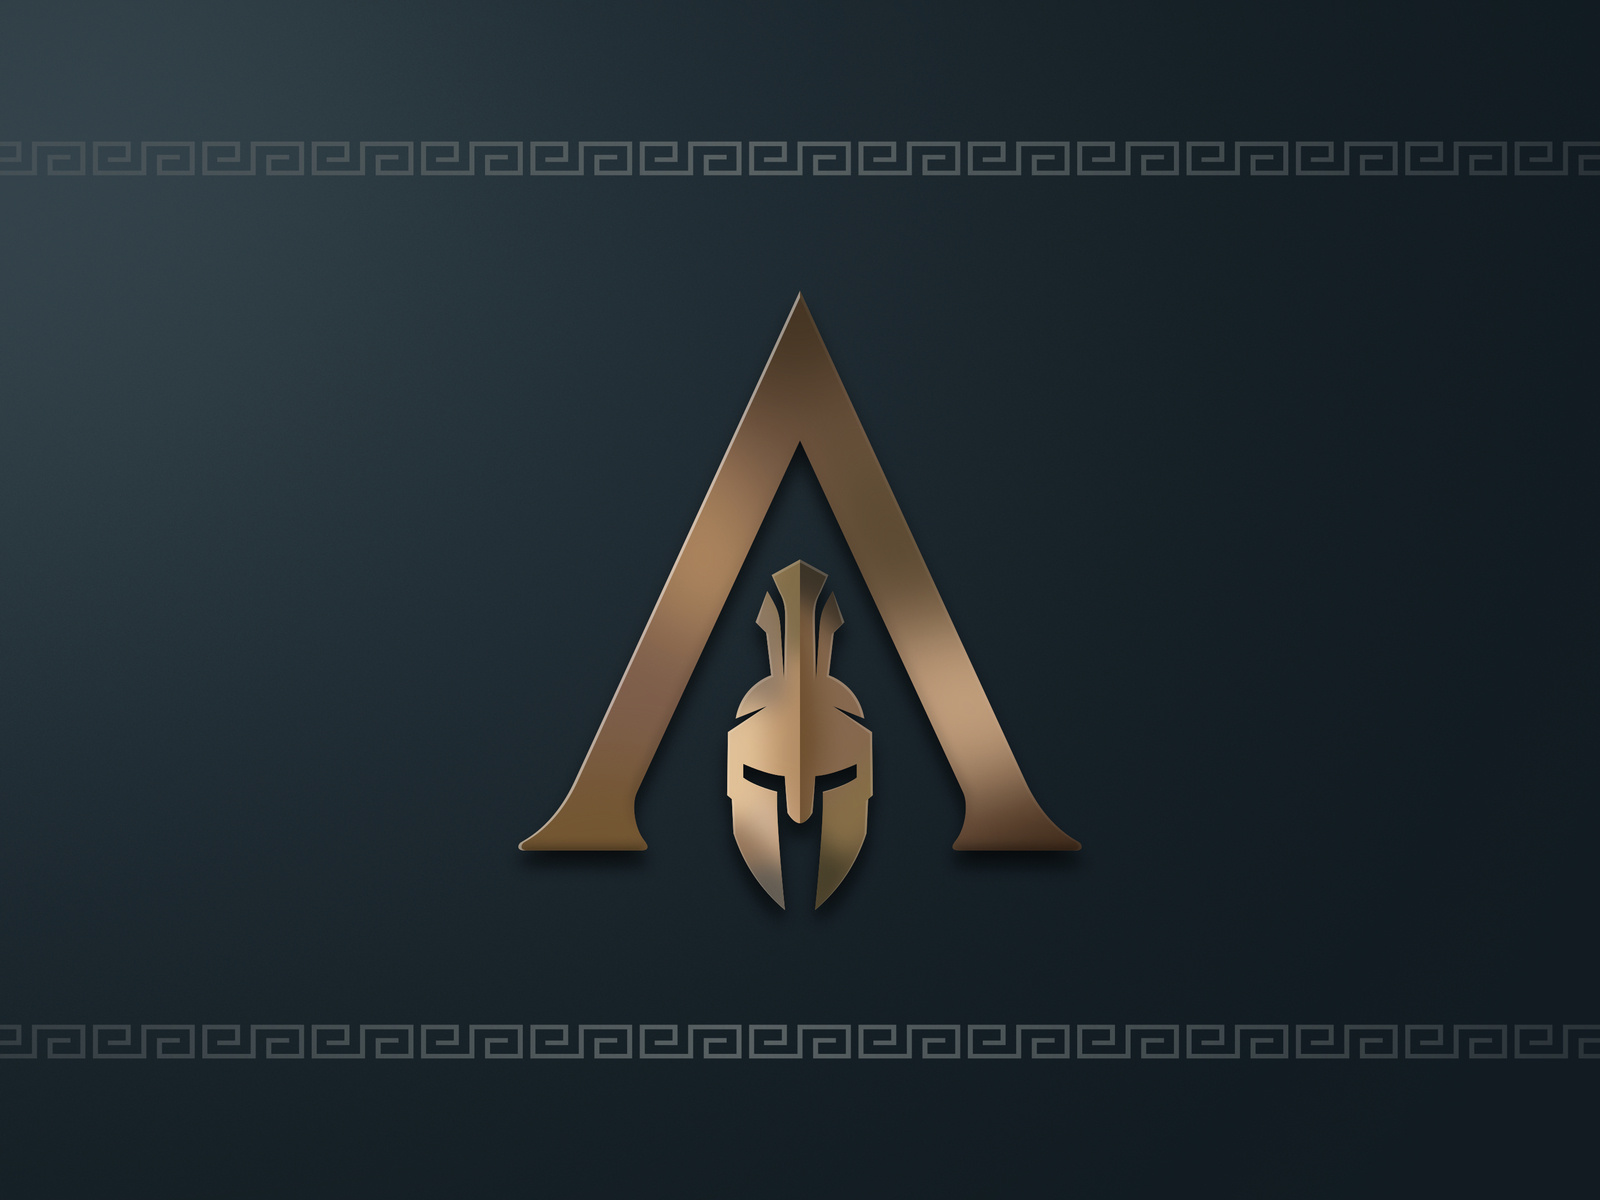 Assassins Creed Brotherhood wallpapers or desktop backgrounds